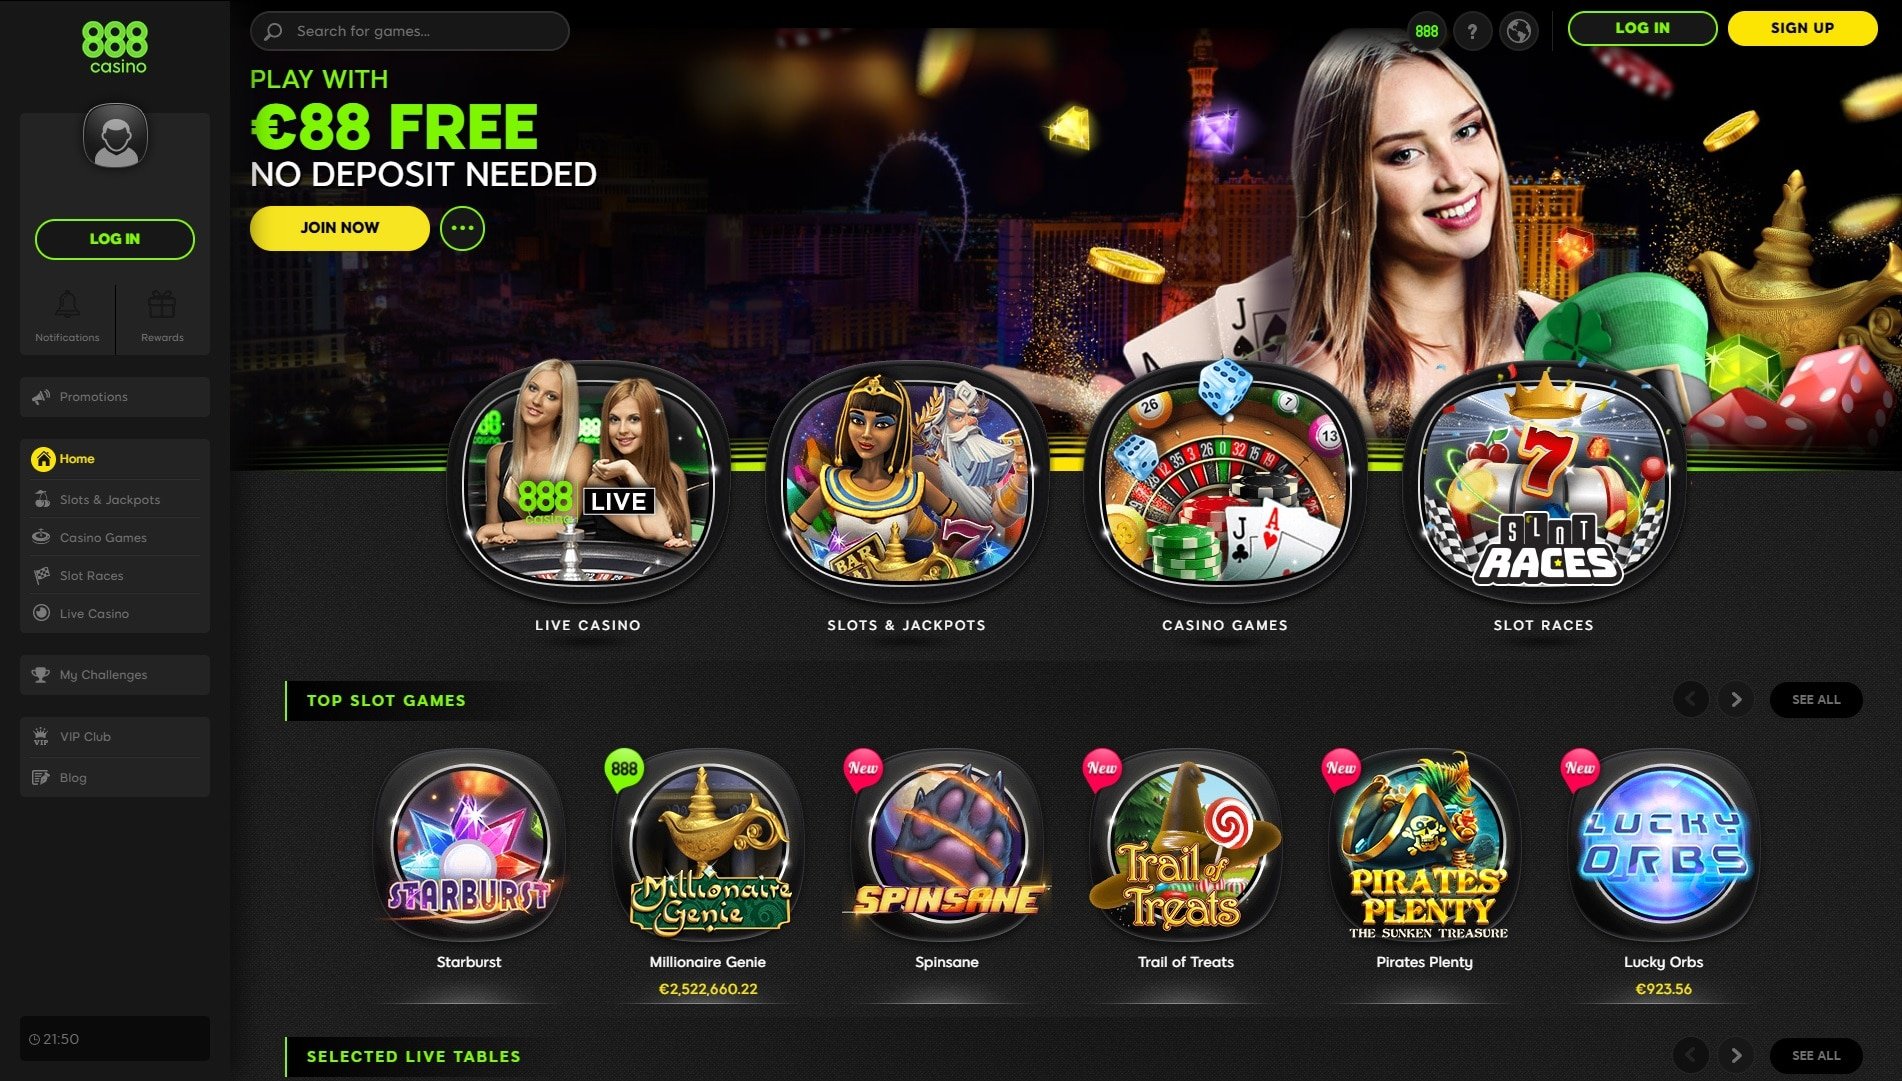 Best online casino slots vbulletin розыгрыш столото 27 февраля